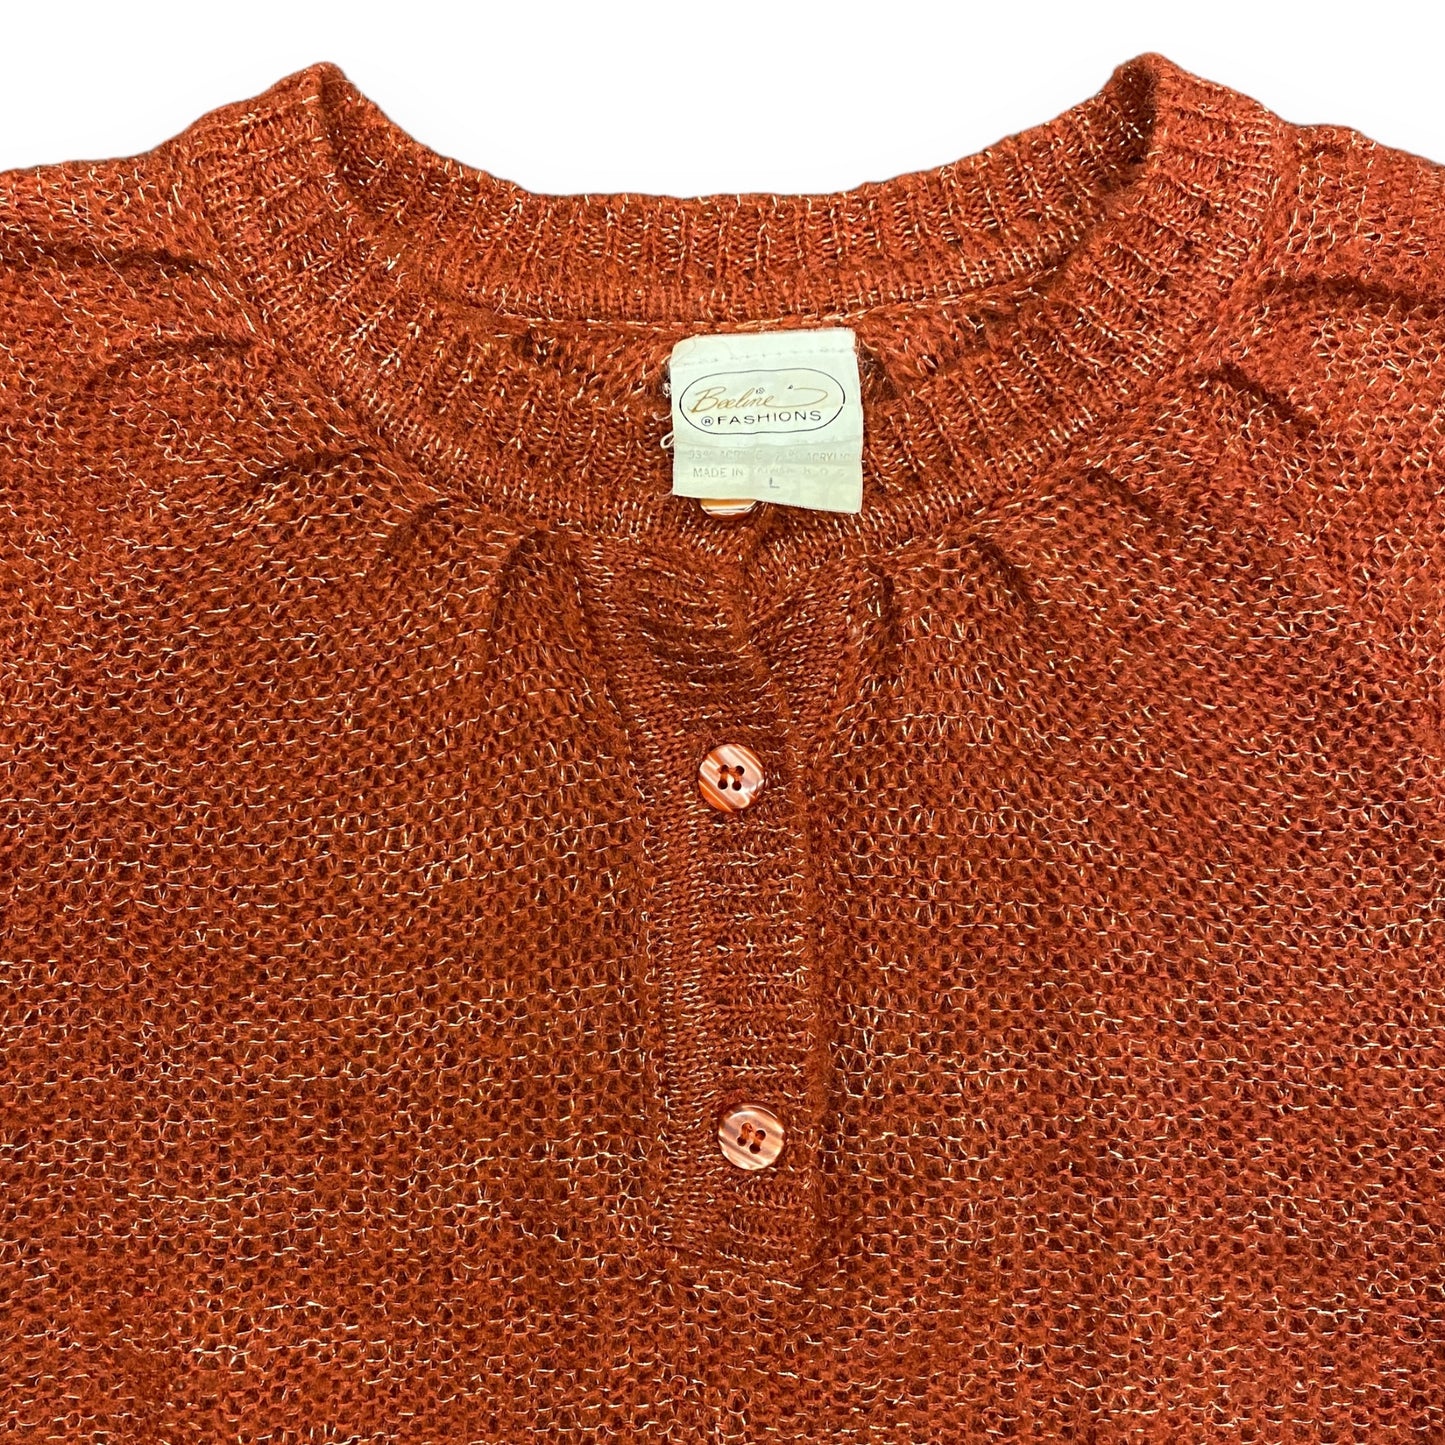 1960s Beeline Loose Knit Henley Sweater - Size Large